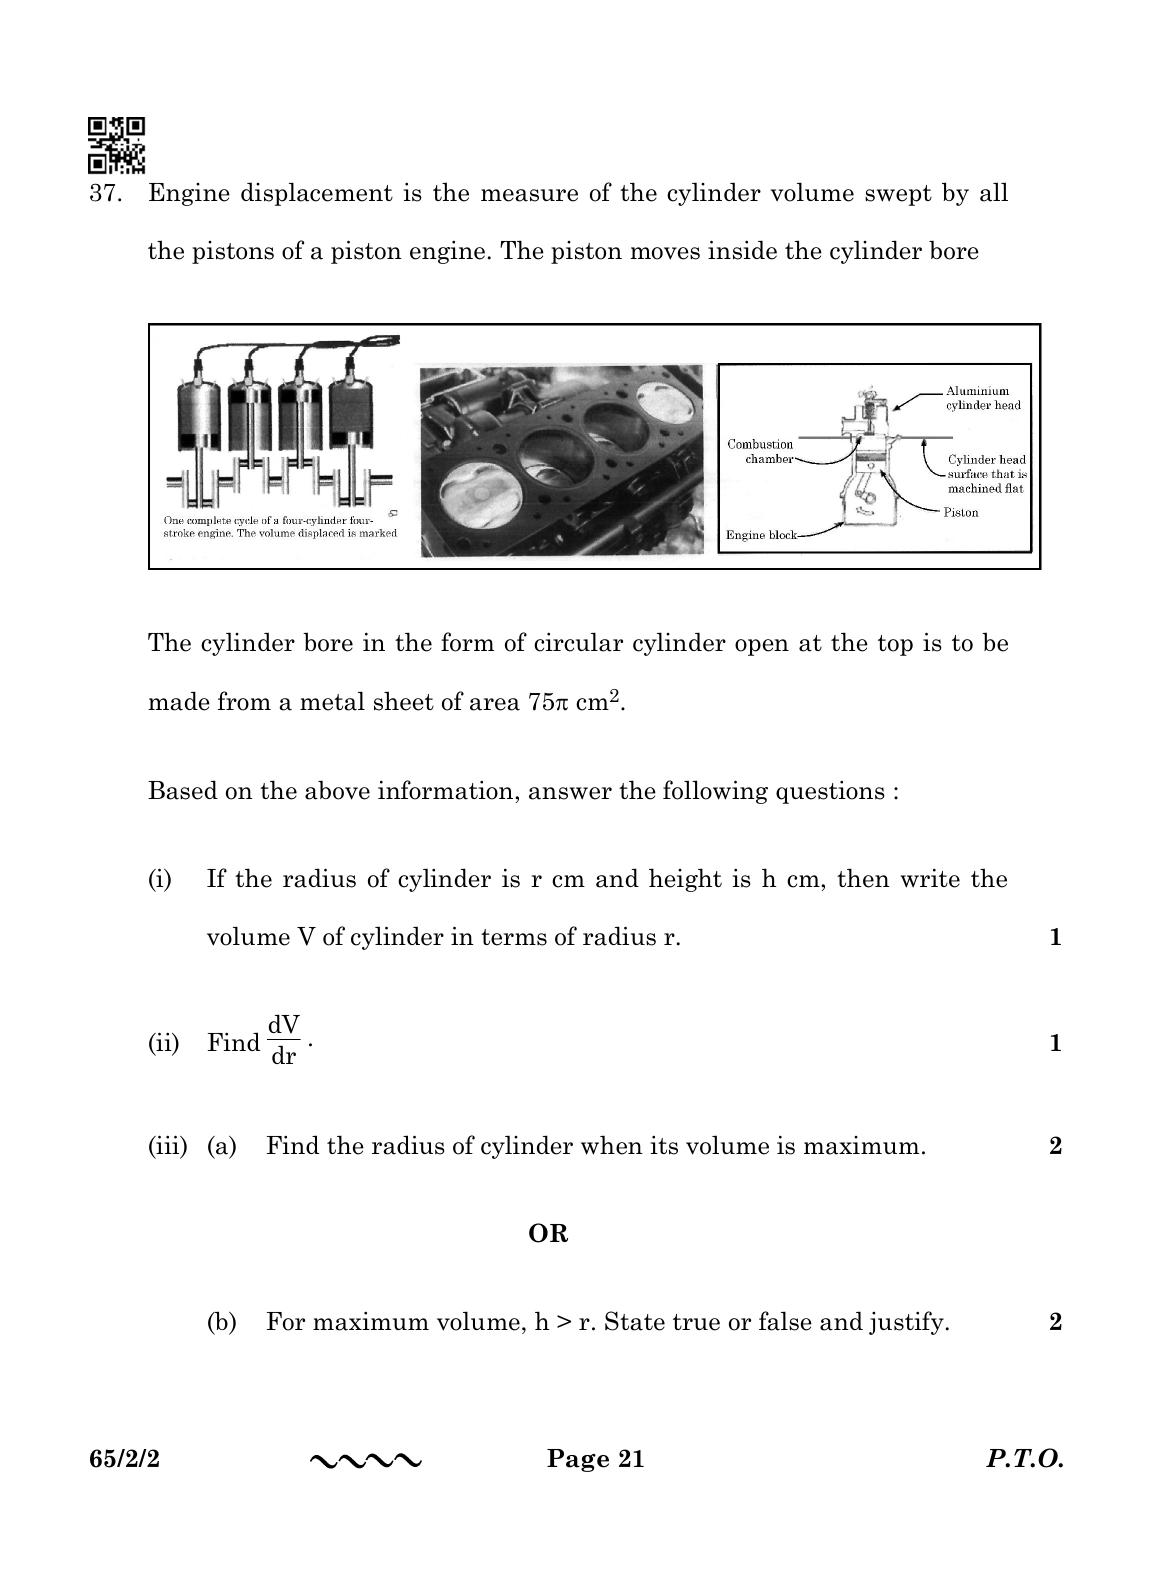 CBSE Class 12 65-2-2 MATHEMATICS 2023 Question Paper - Page 21